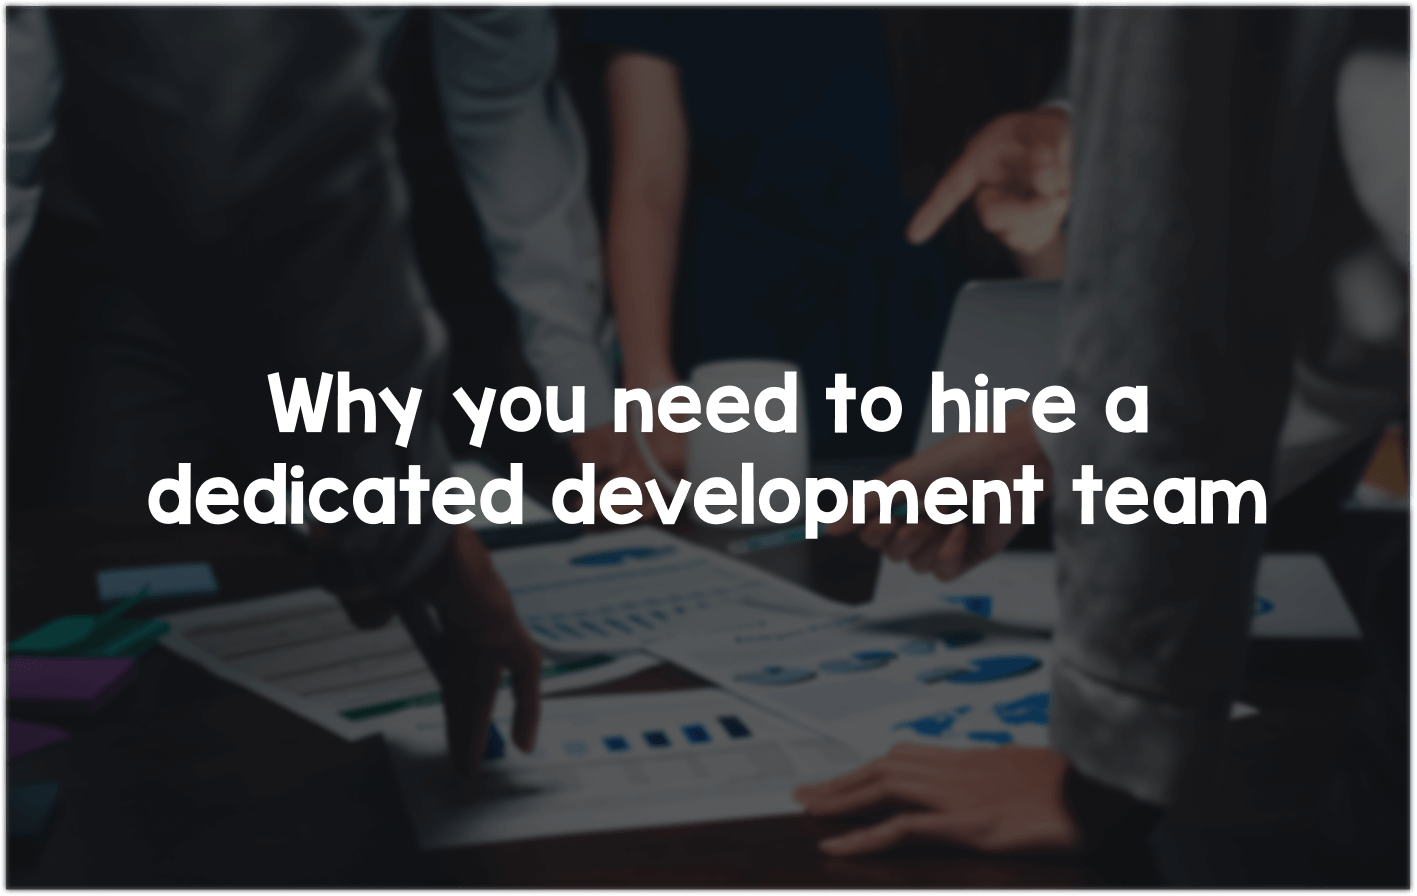 Hire a dedicated development team